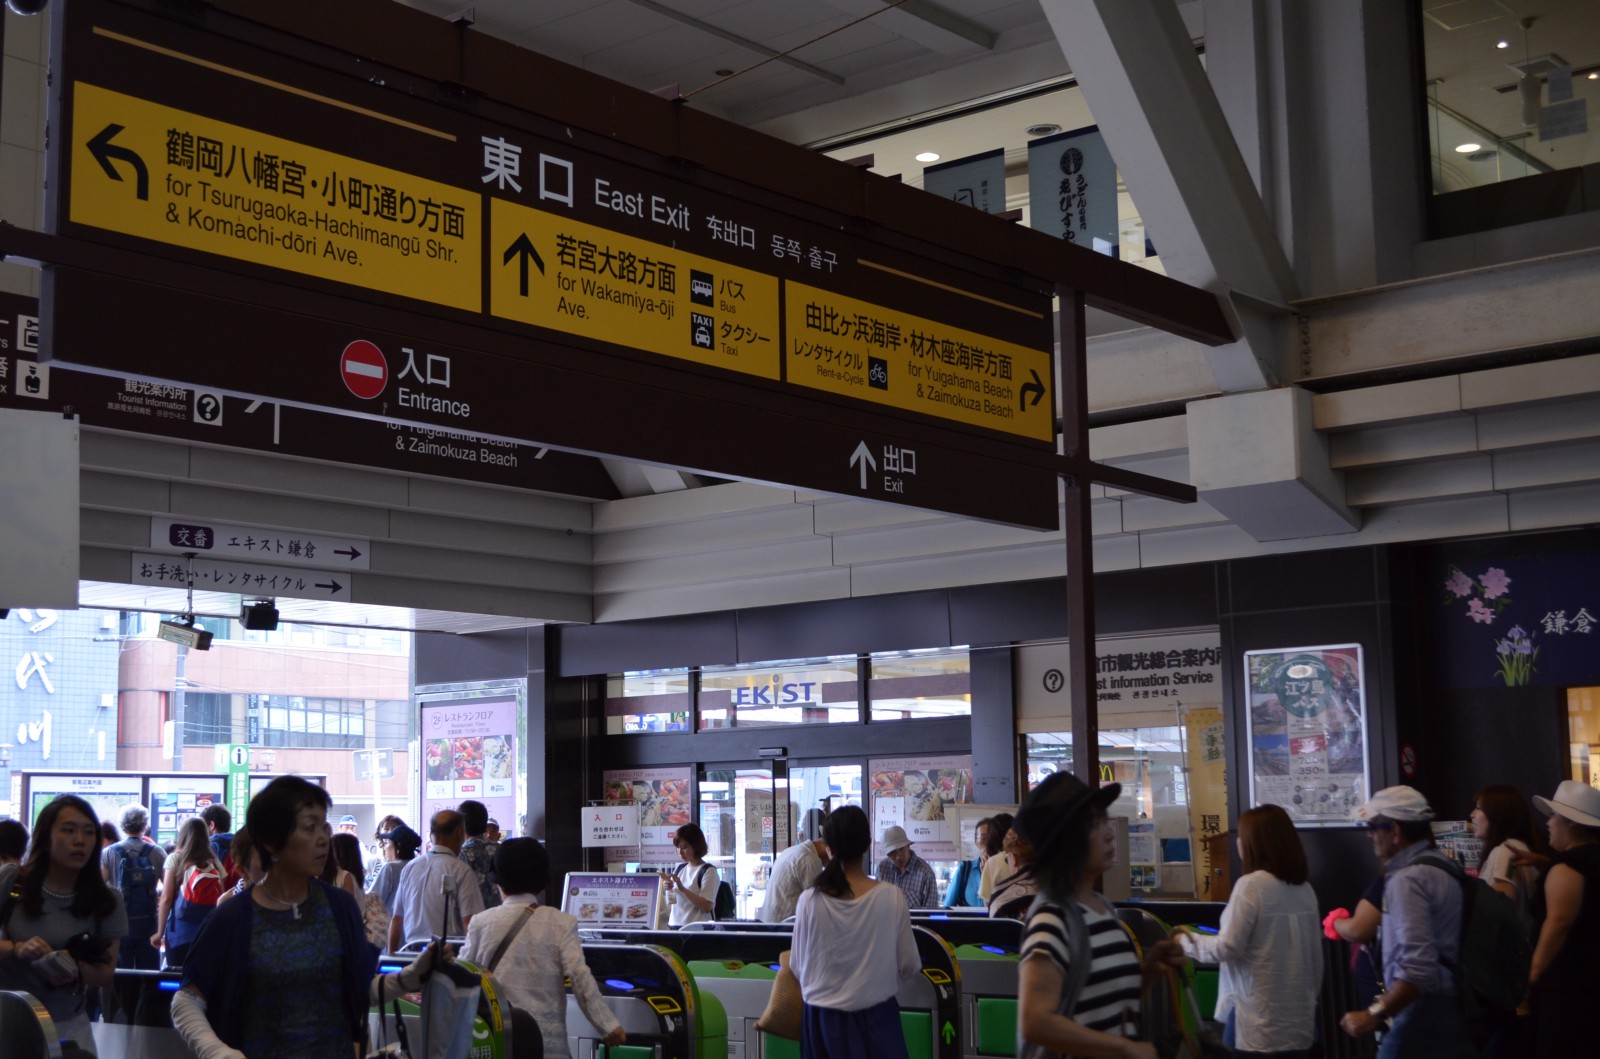 The ticket gates at Kamakura Station